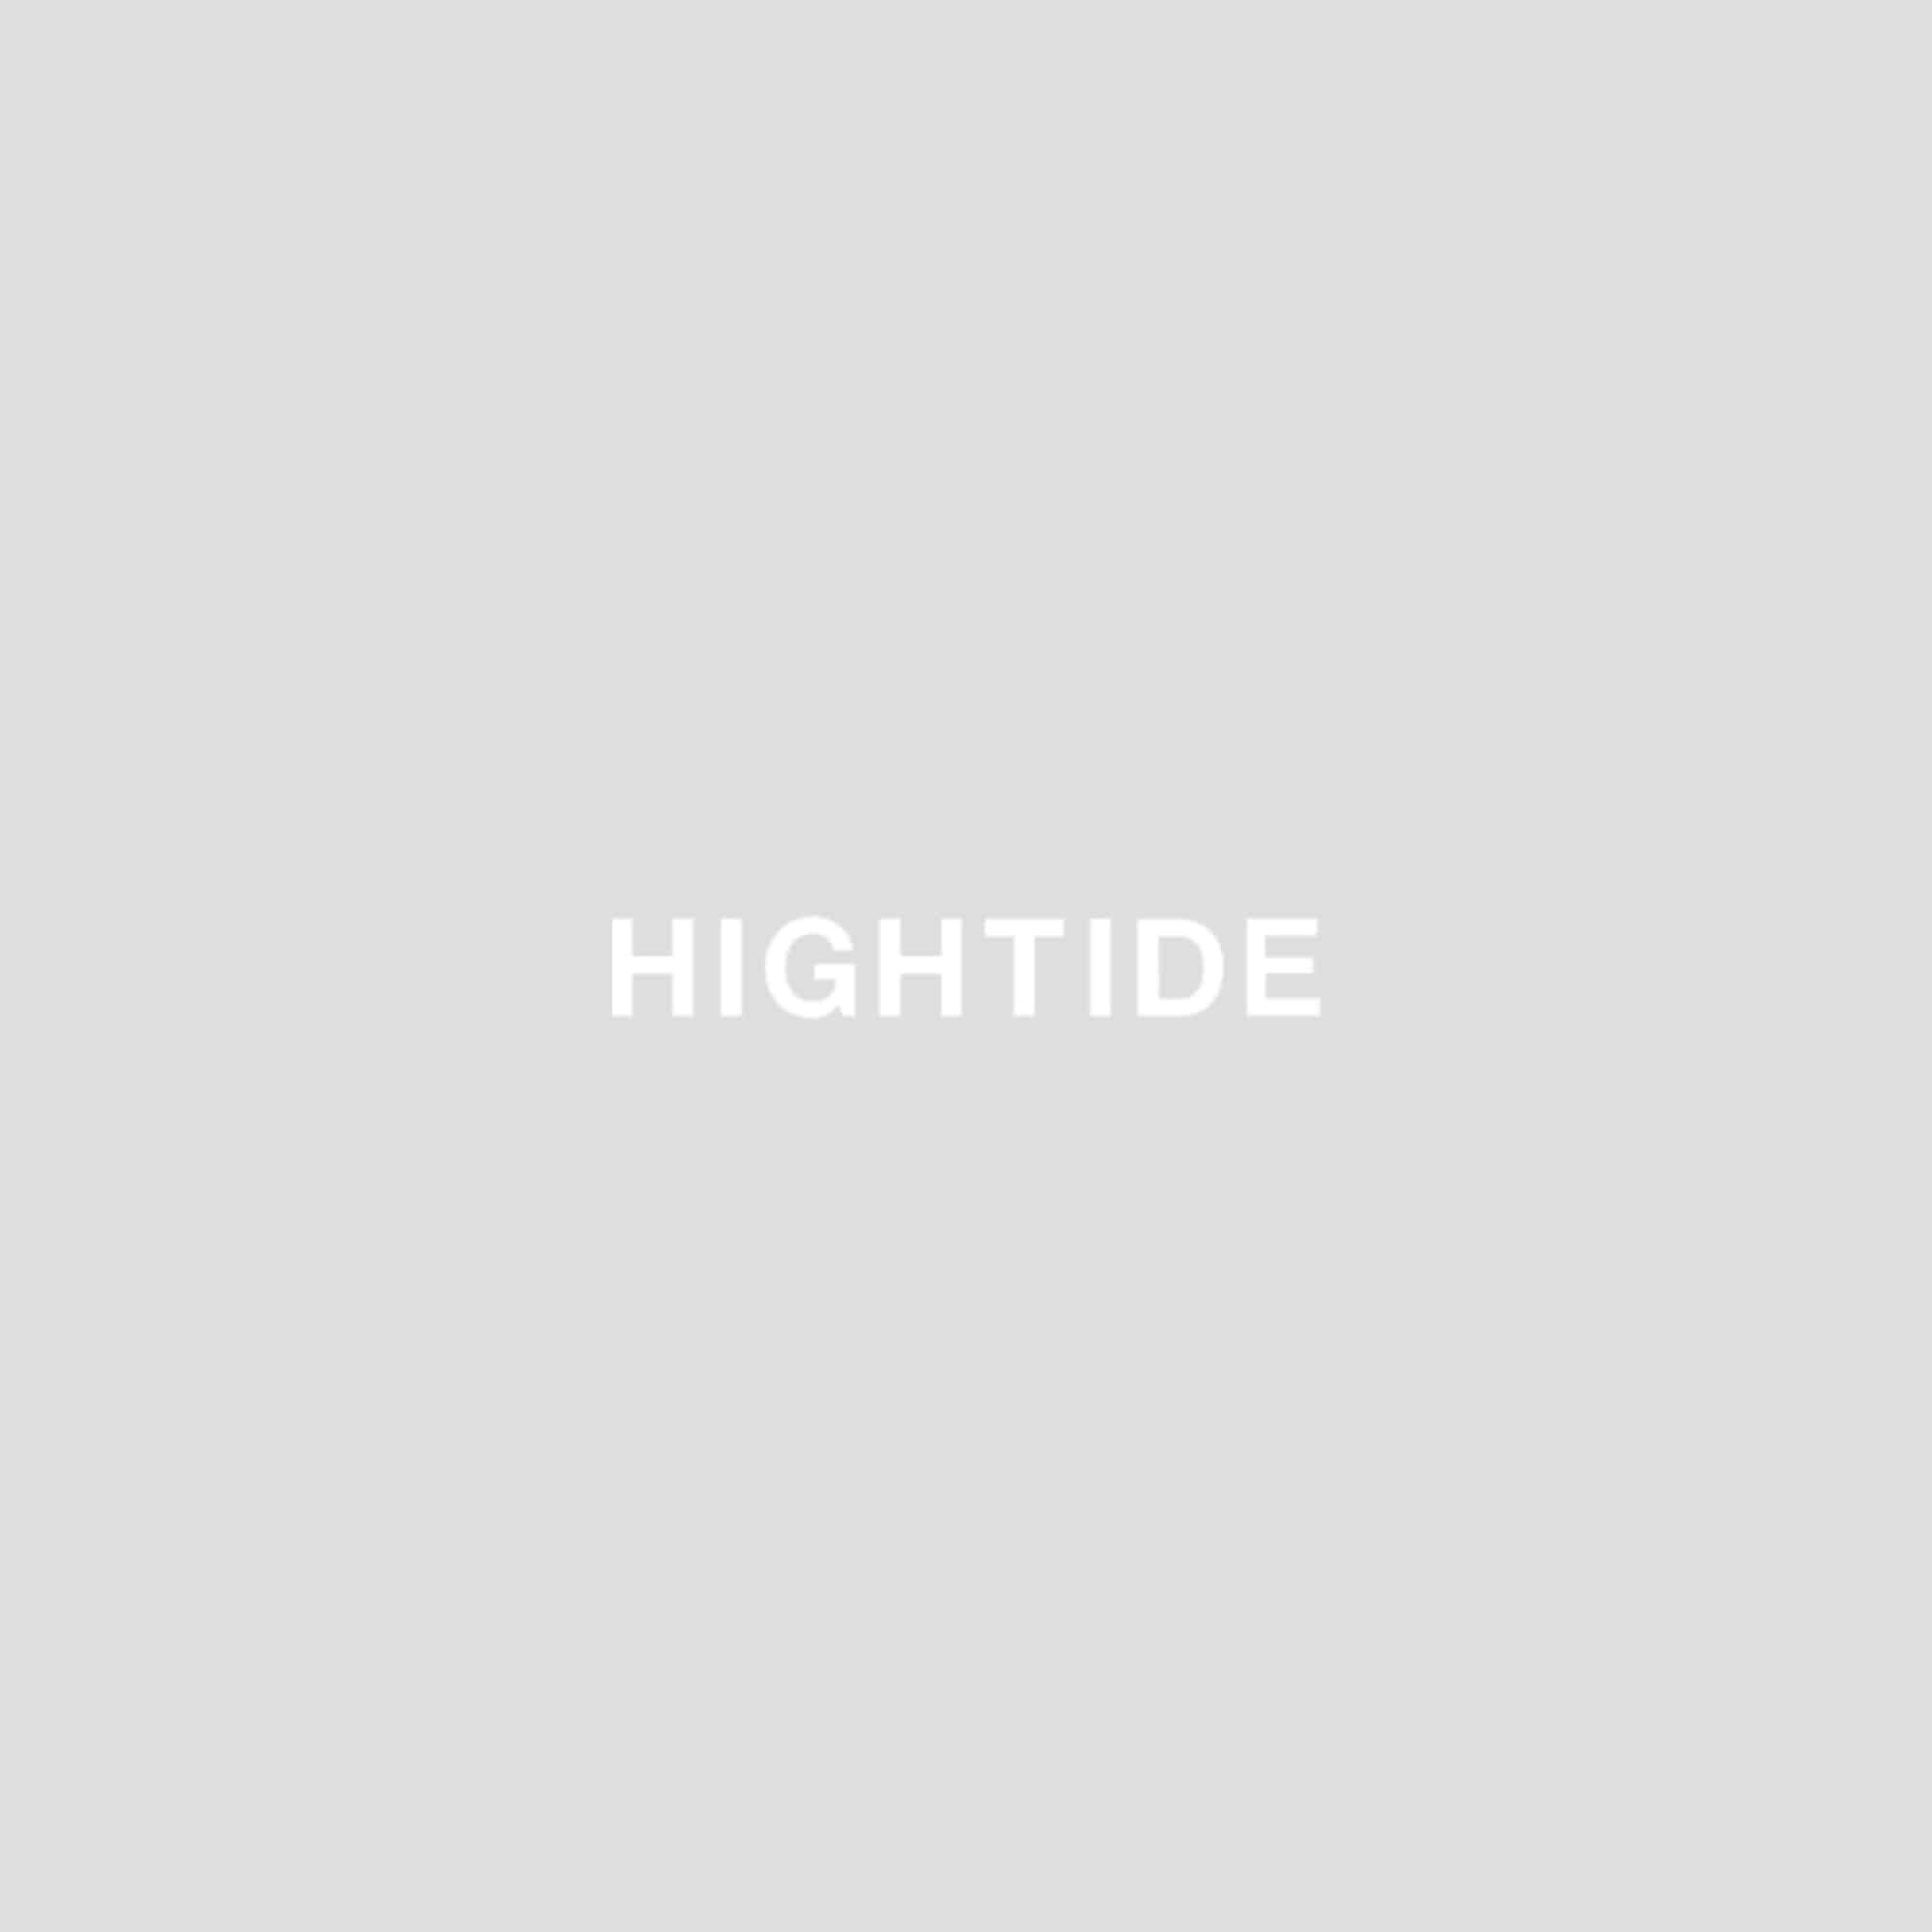 HIGHTIDE